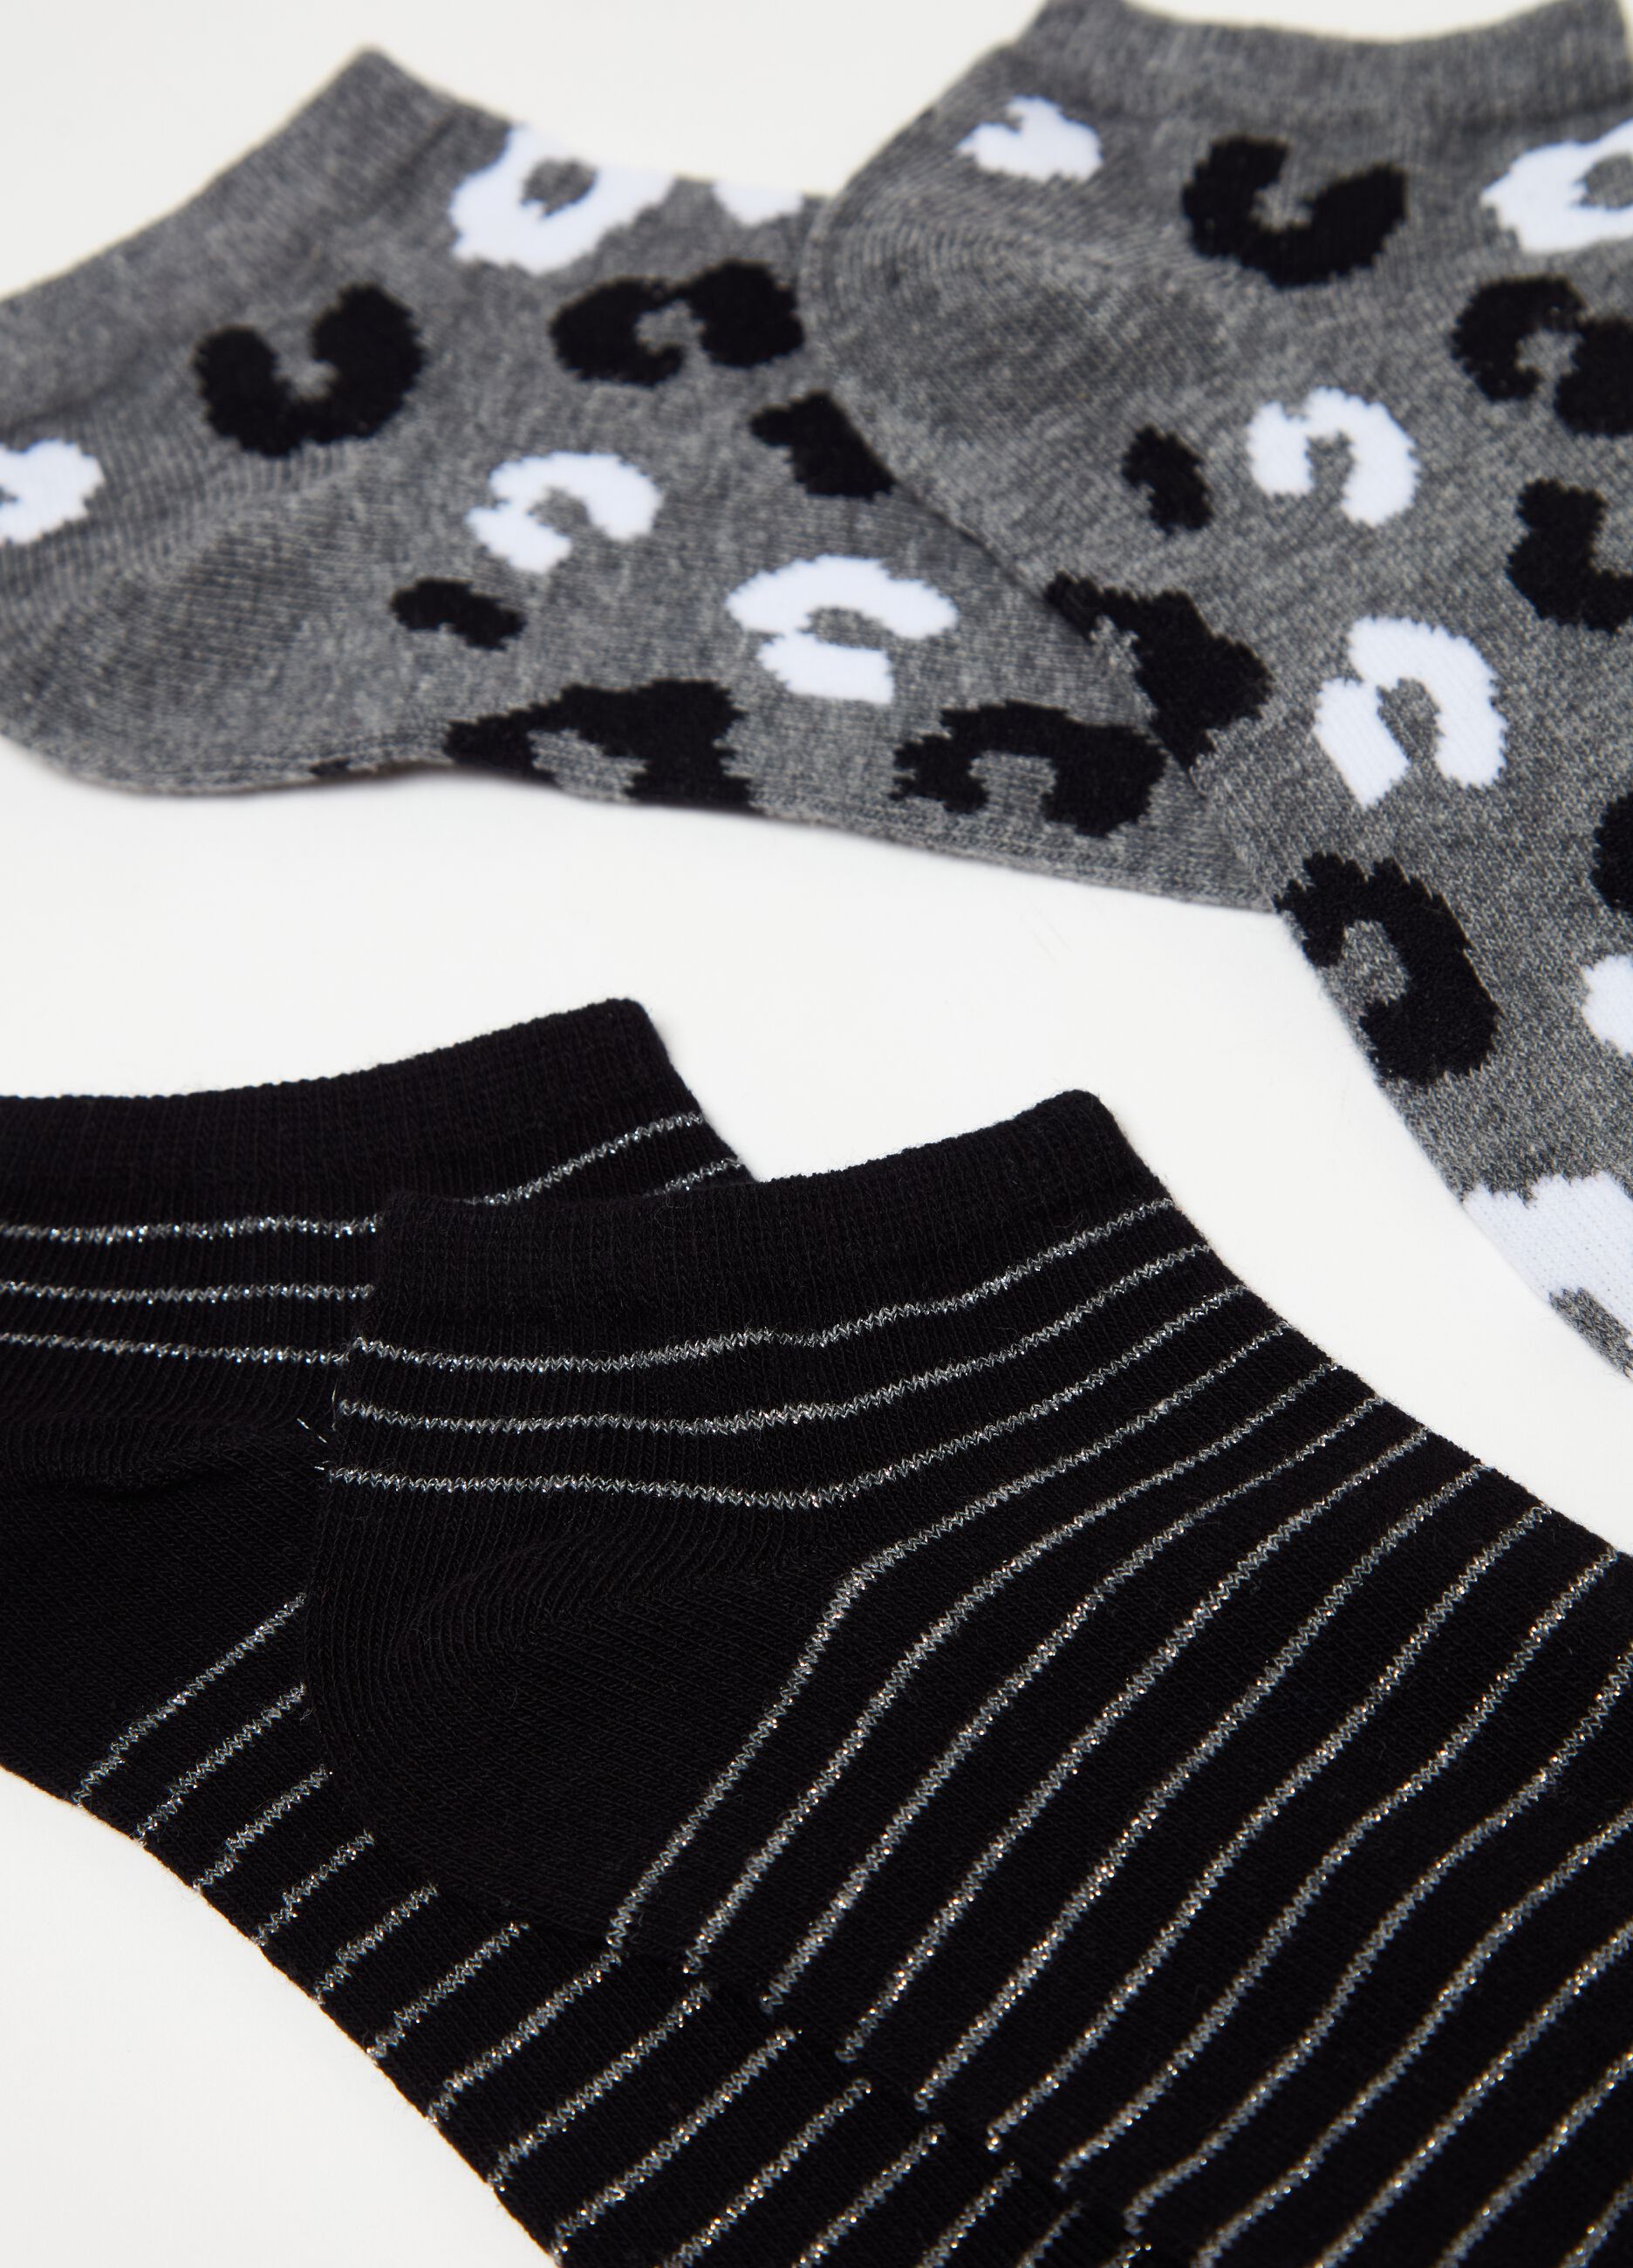 Multipack siete calcetines invisibles con detalles lurex